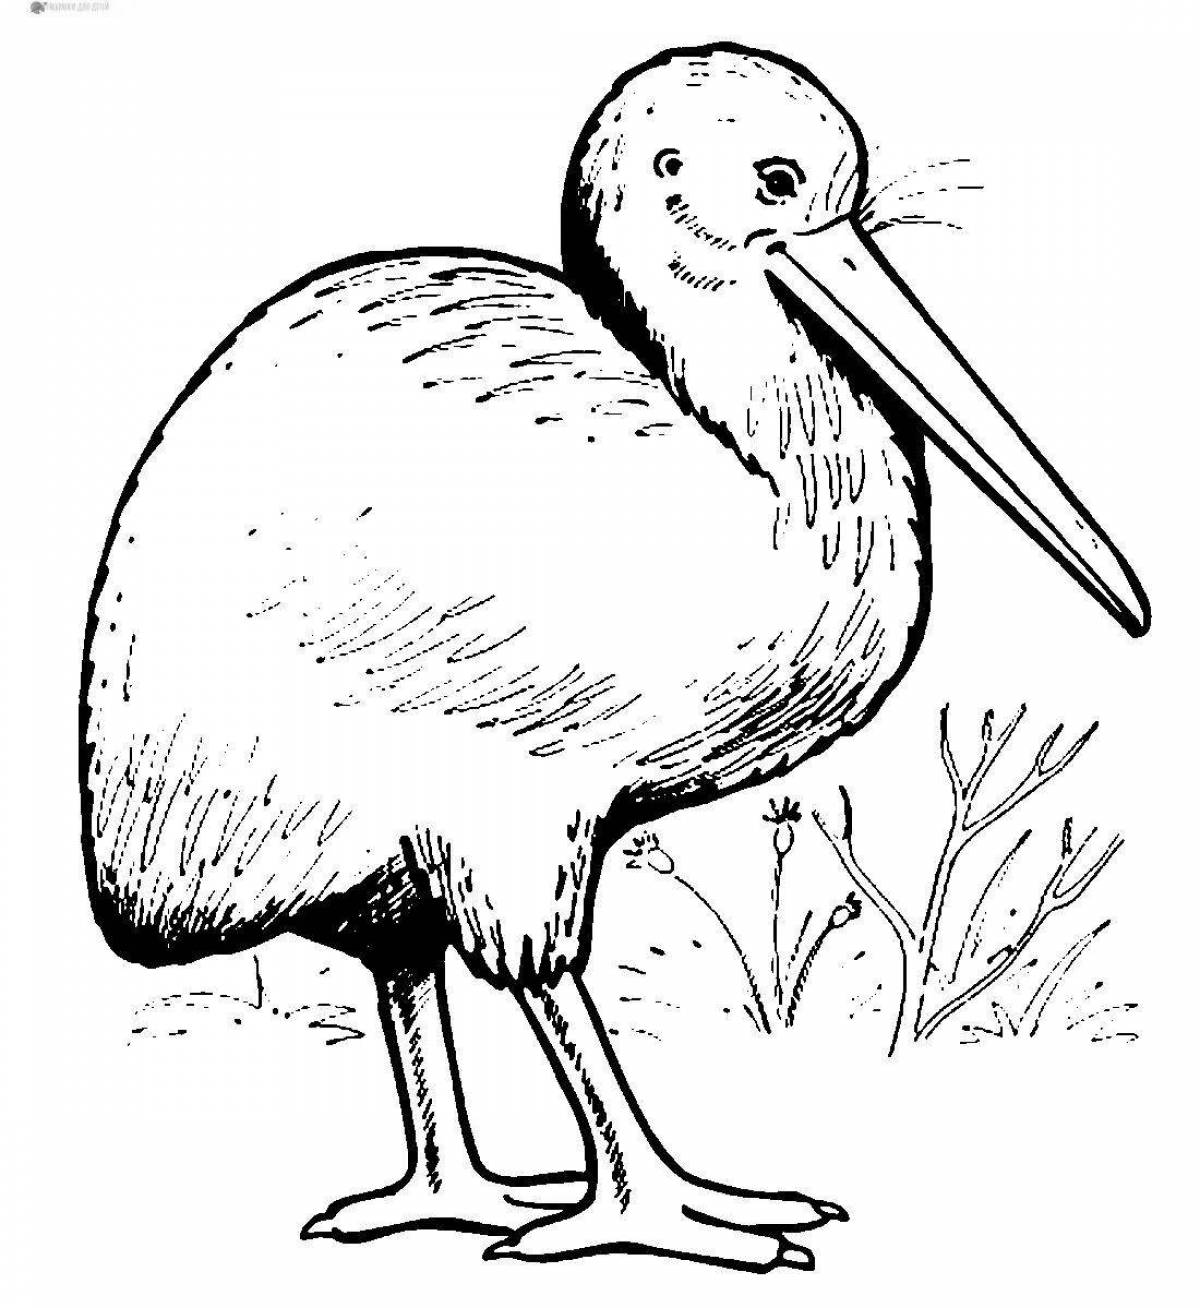 Kiwi bird #1